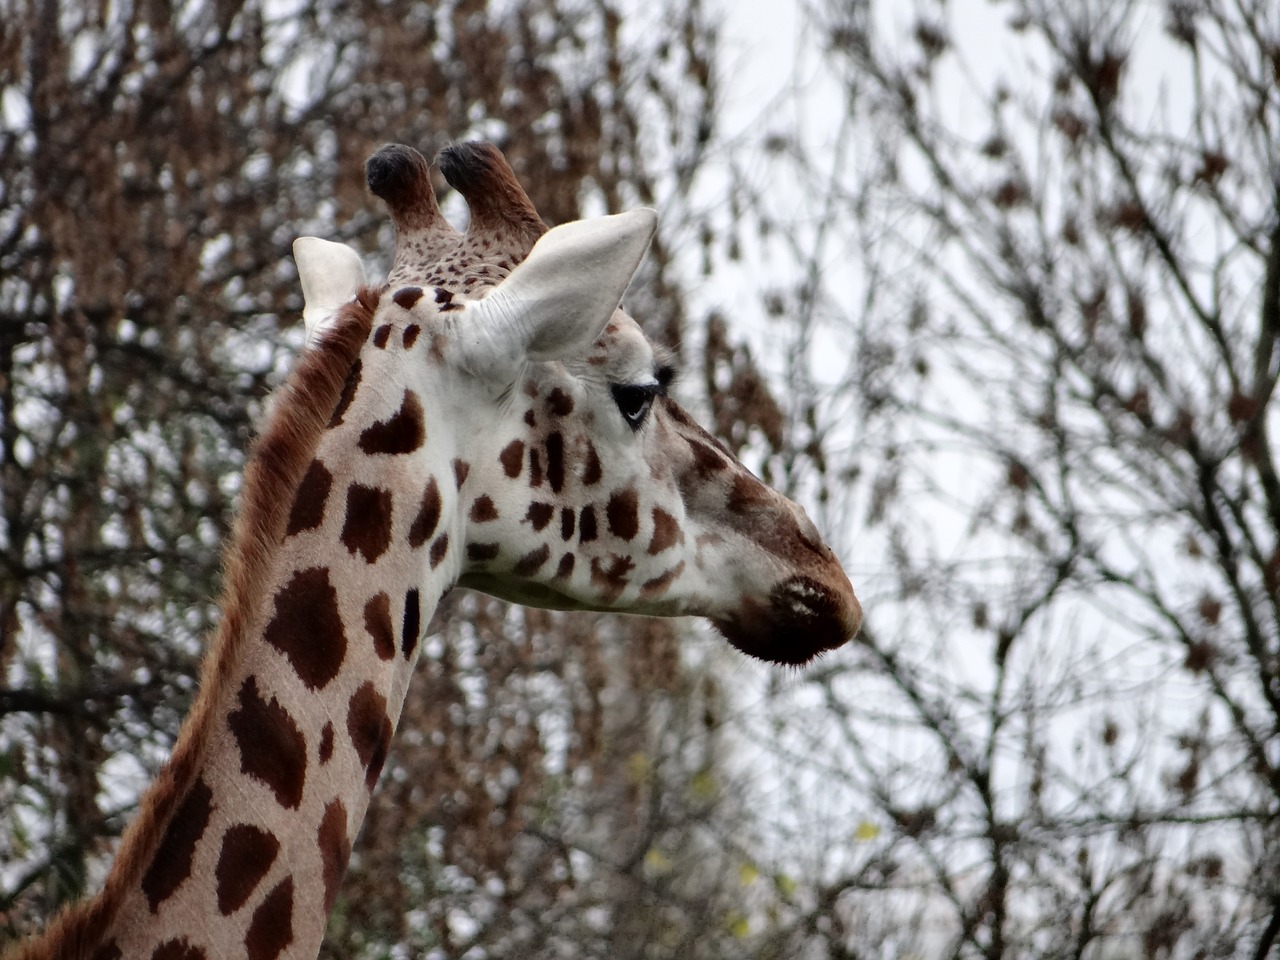 giraffe nature tanzania free photo